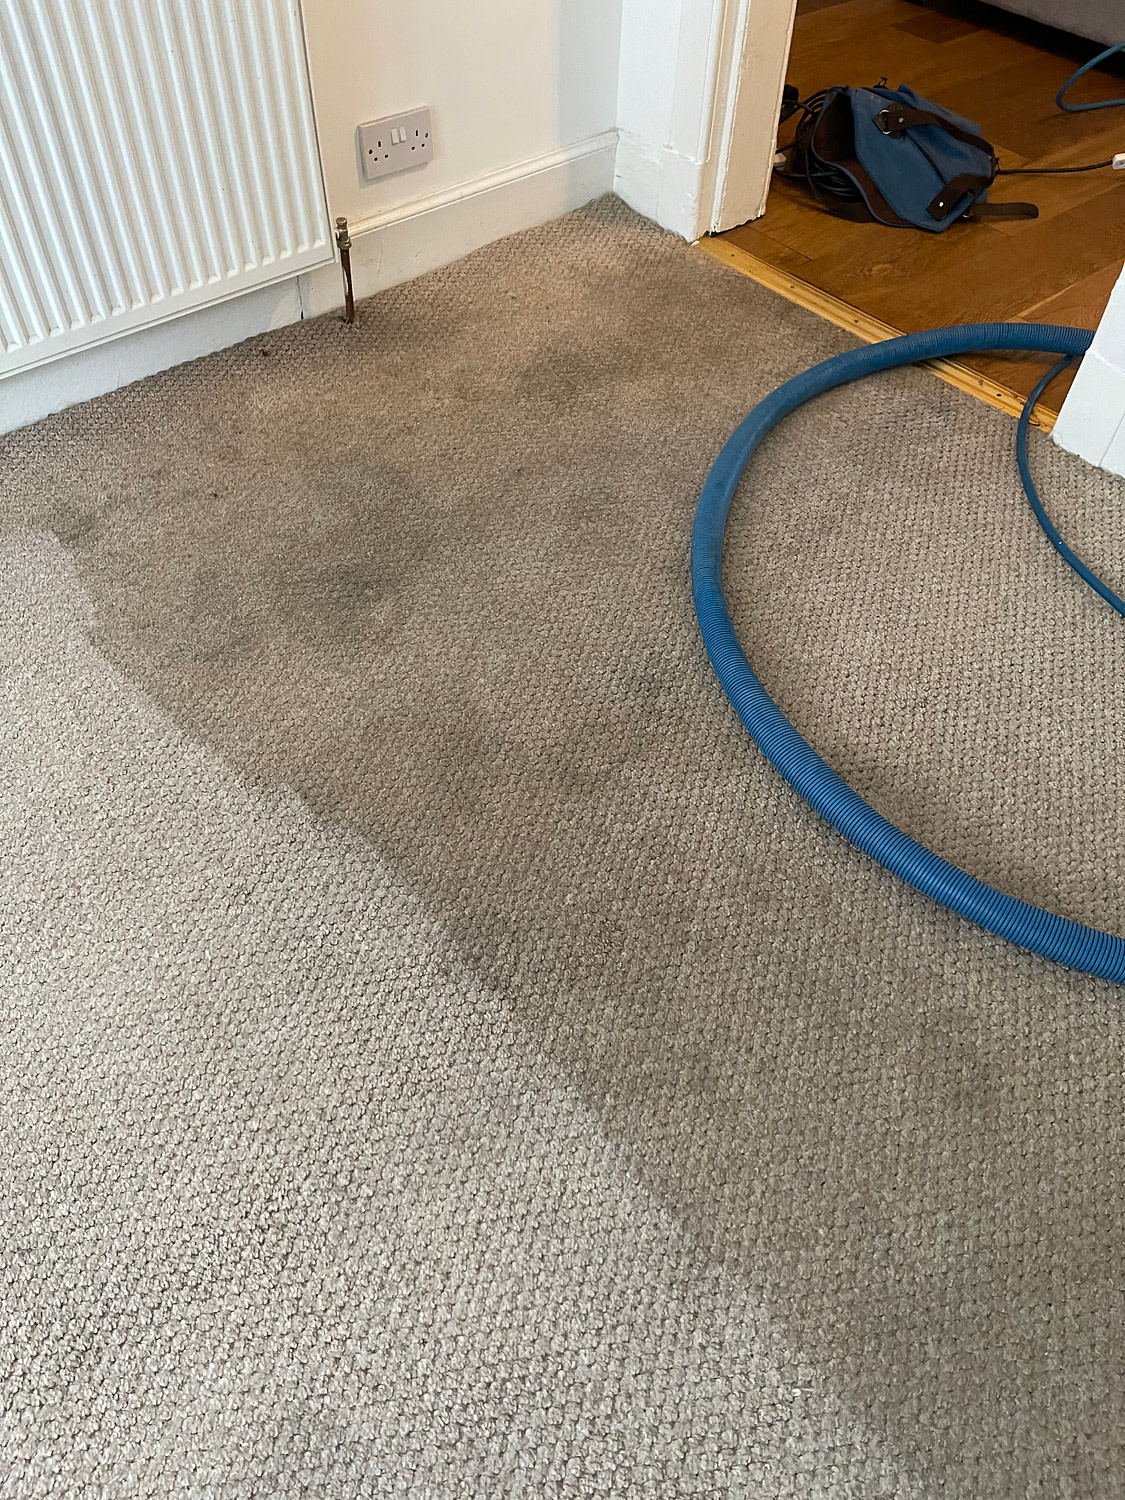 Carpet cleaner glasgow